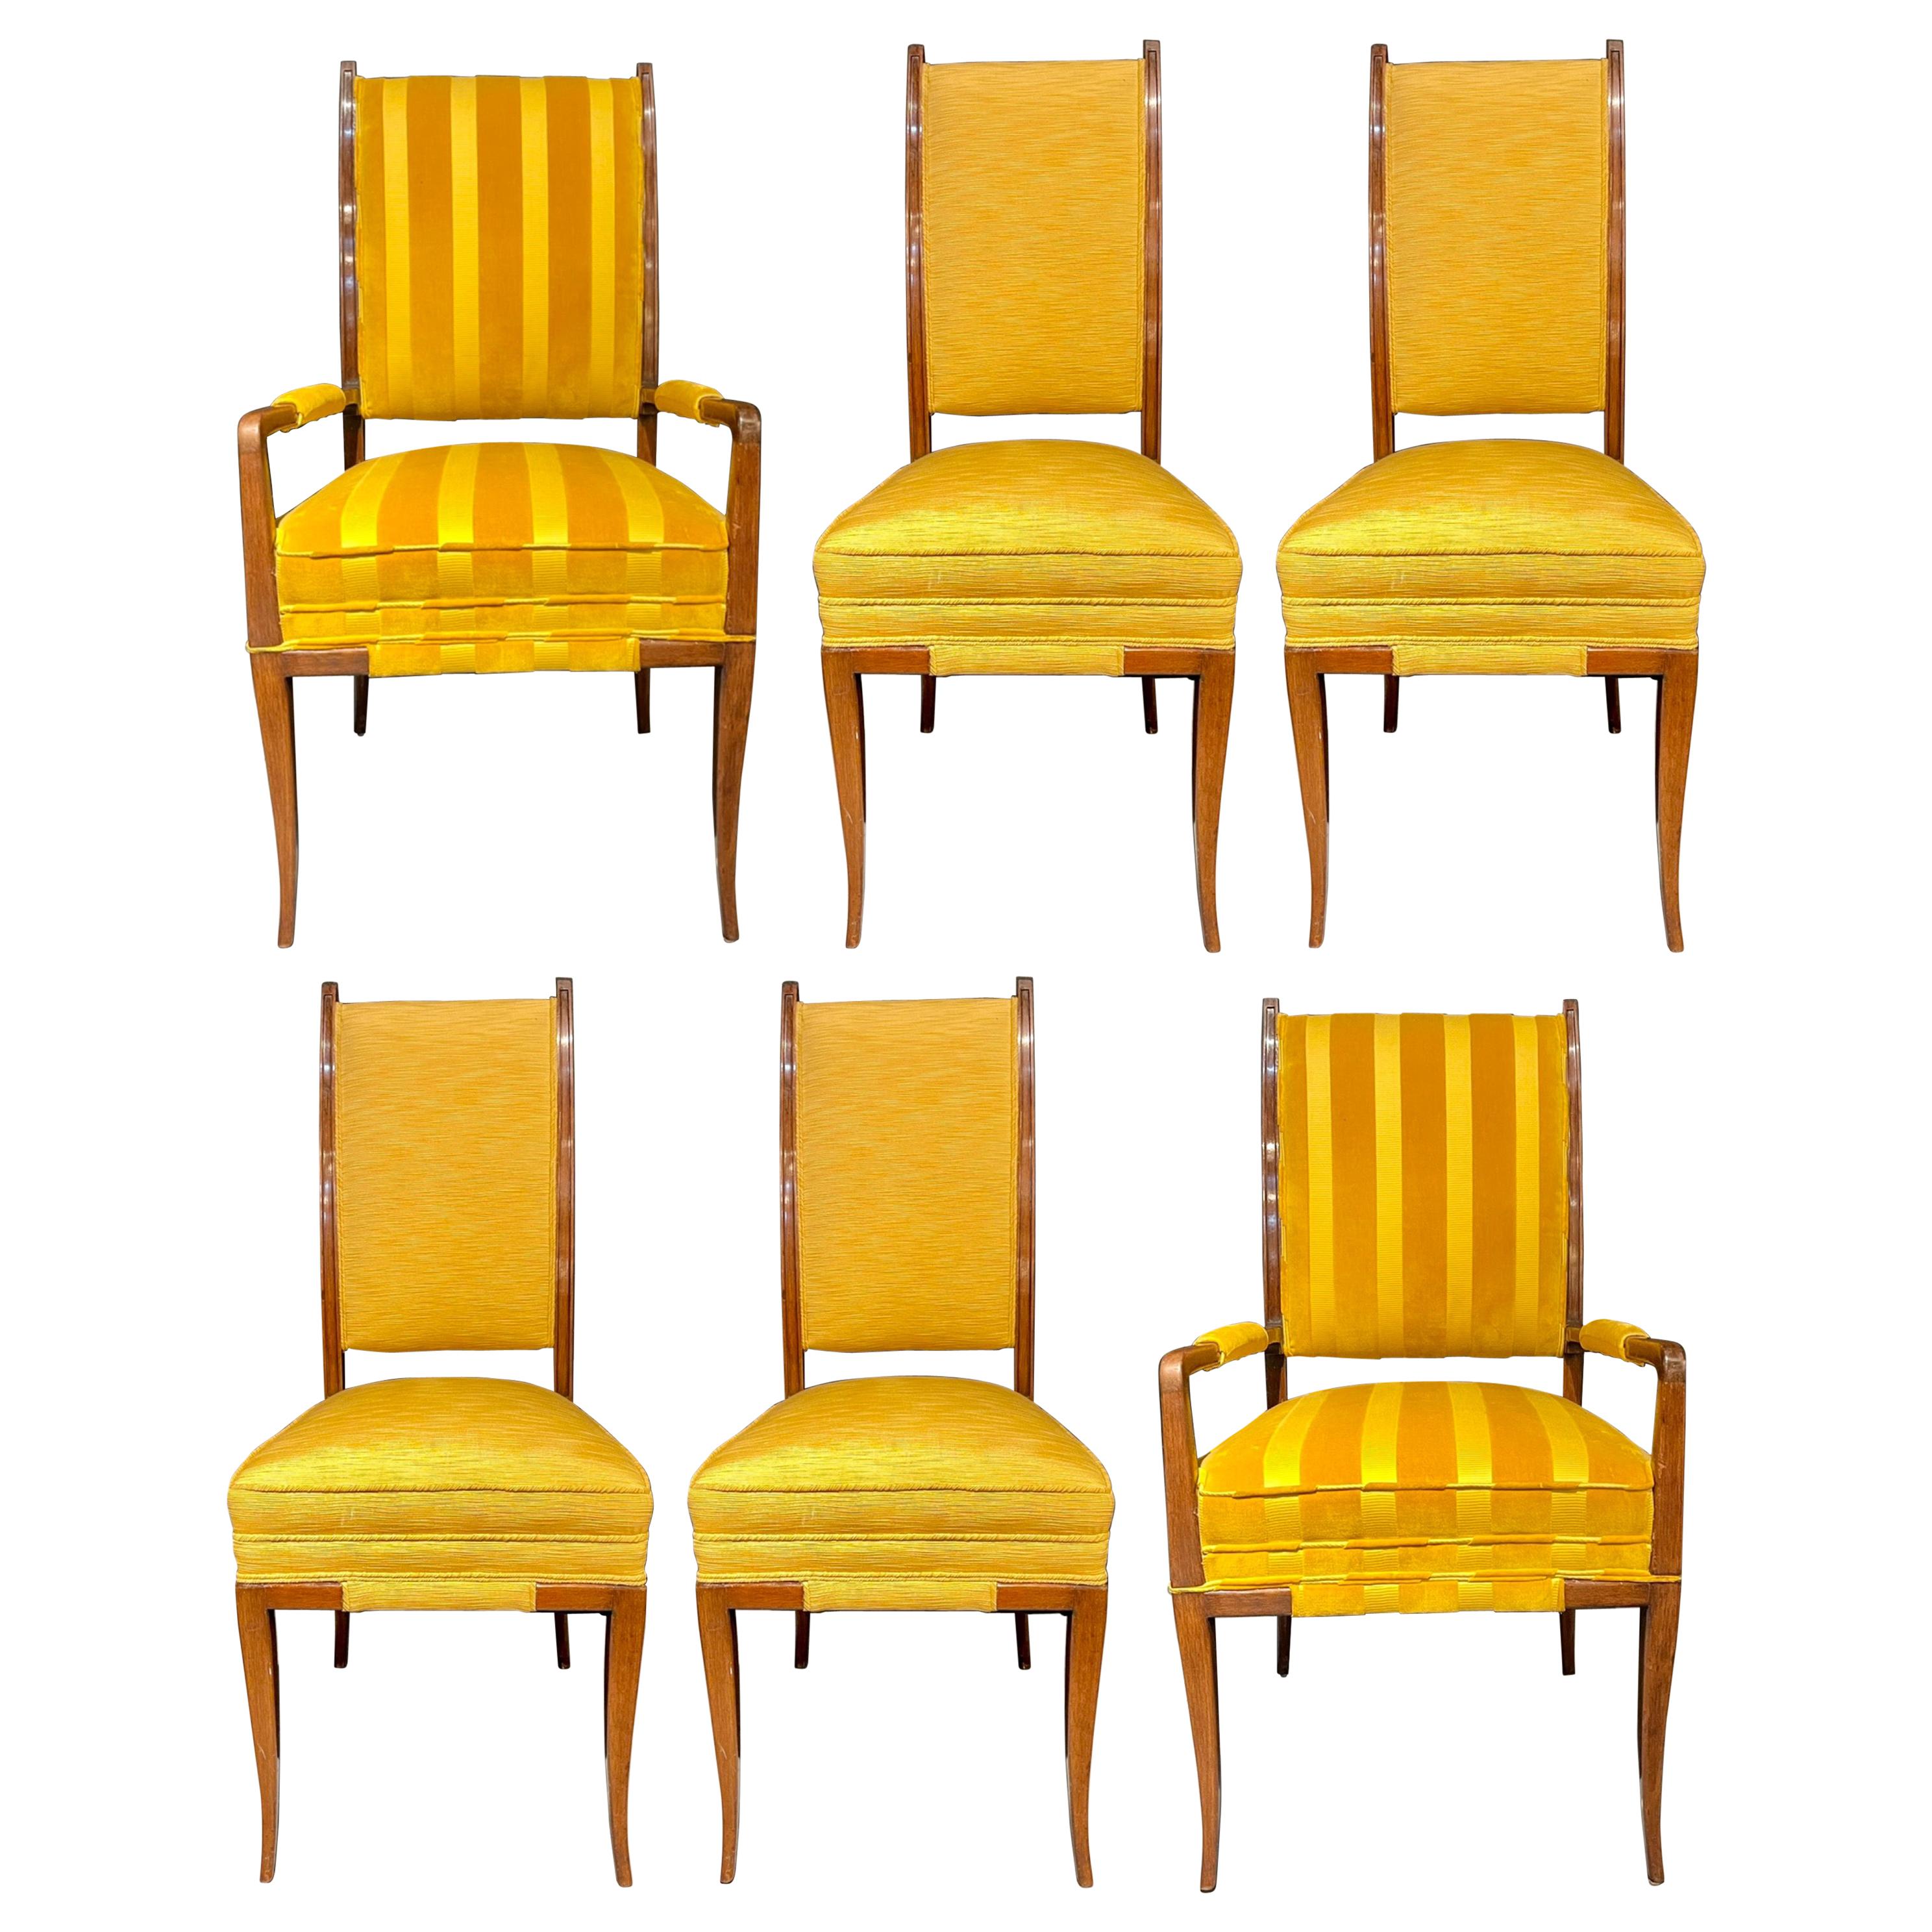 Tommi Parzinger, Mid-Century Modern, Esszimmerstühle, Brown Wood, Yellow Fabric